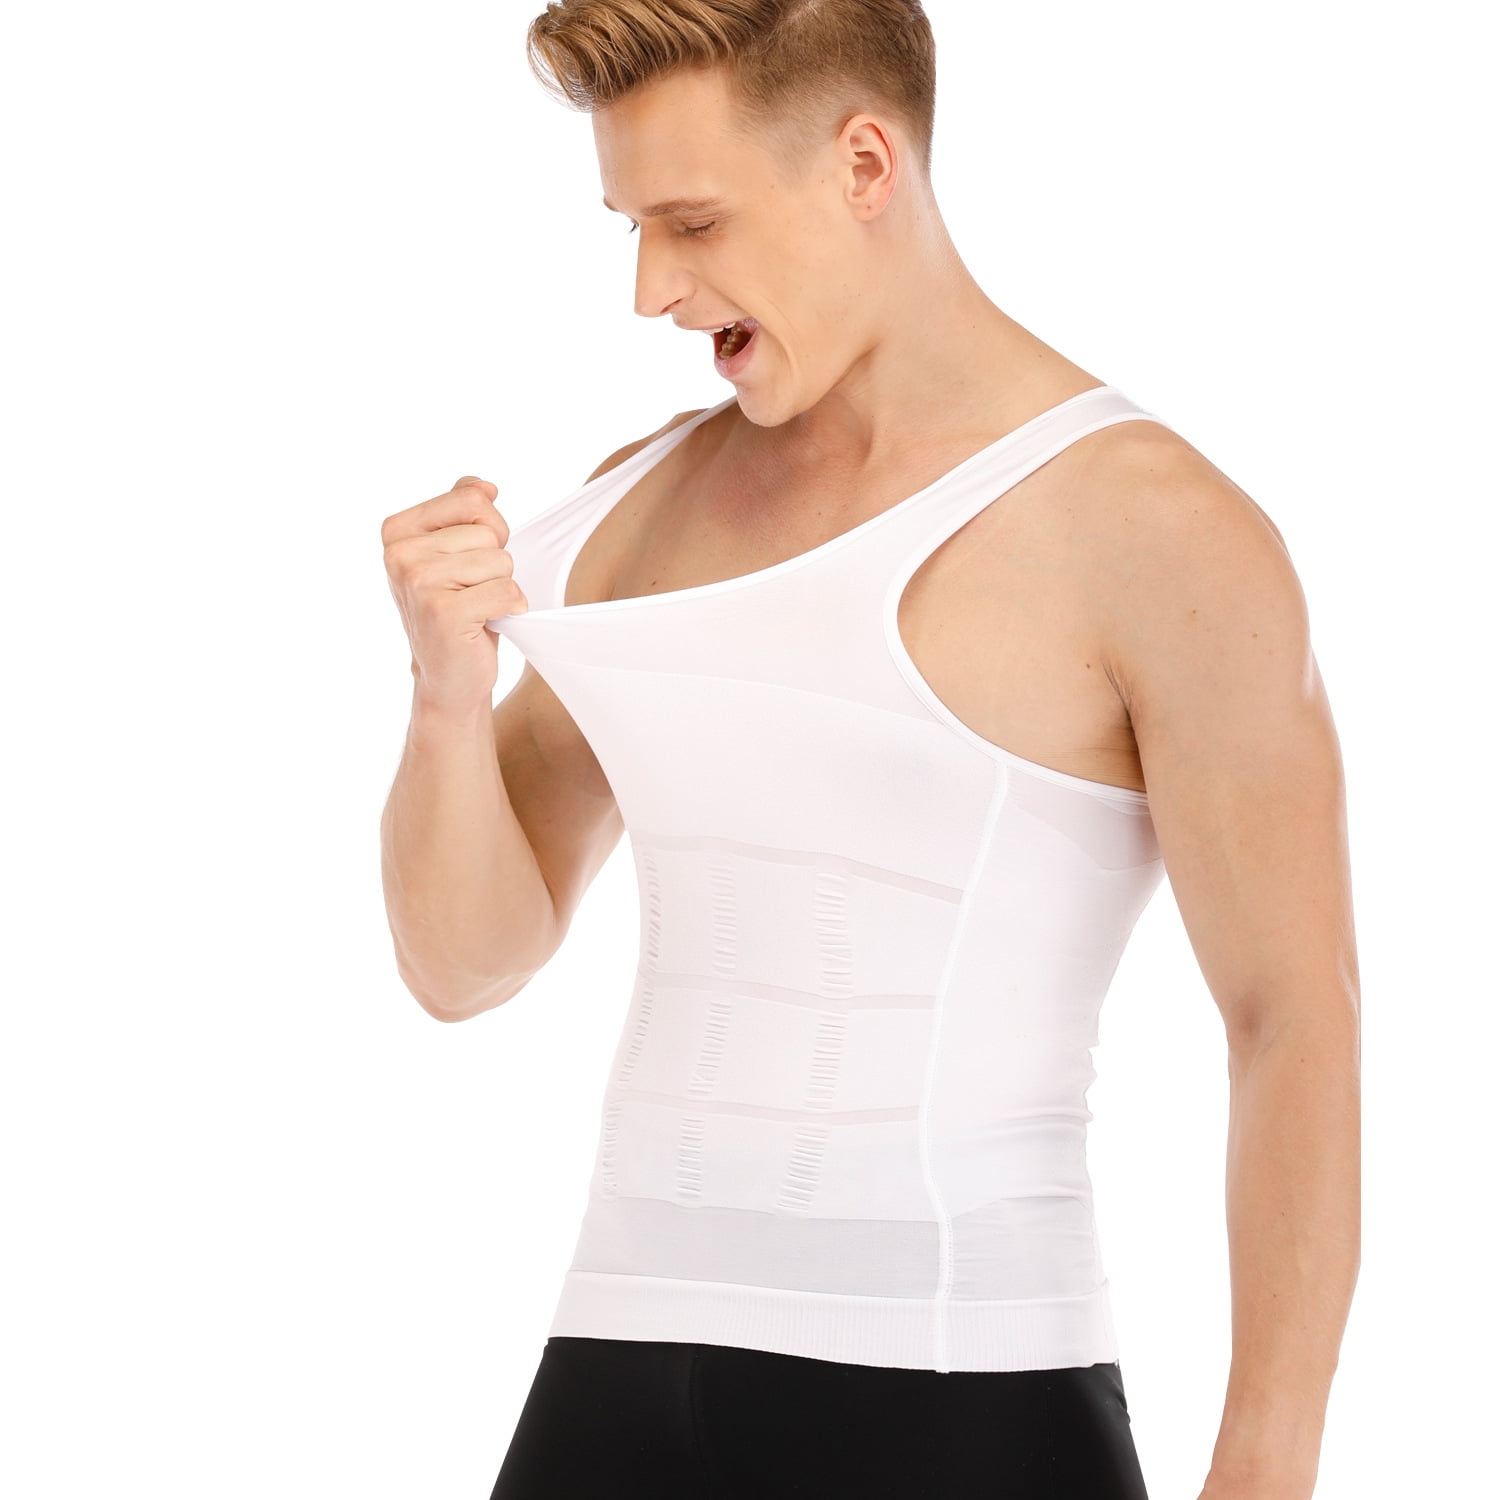 Men's Slimming Body Shaper Shirts Adjustable Breathable Tummy Slim Control Vest